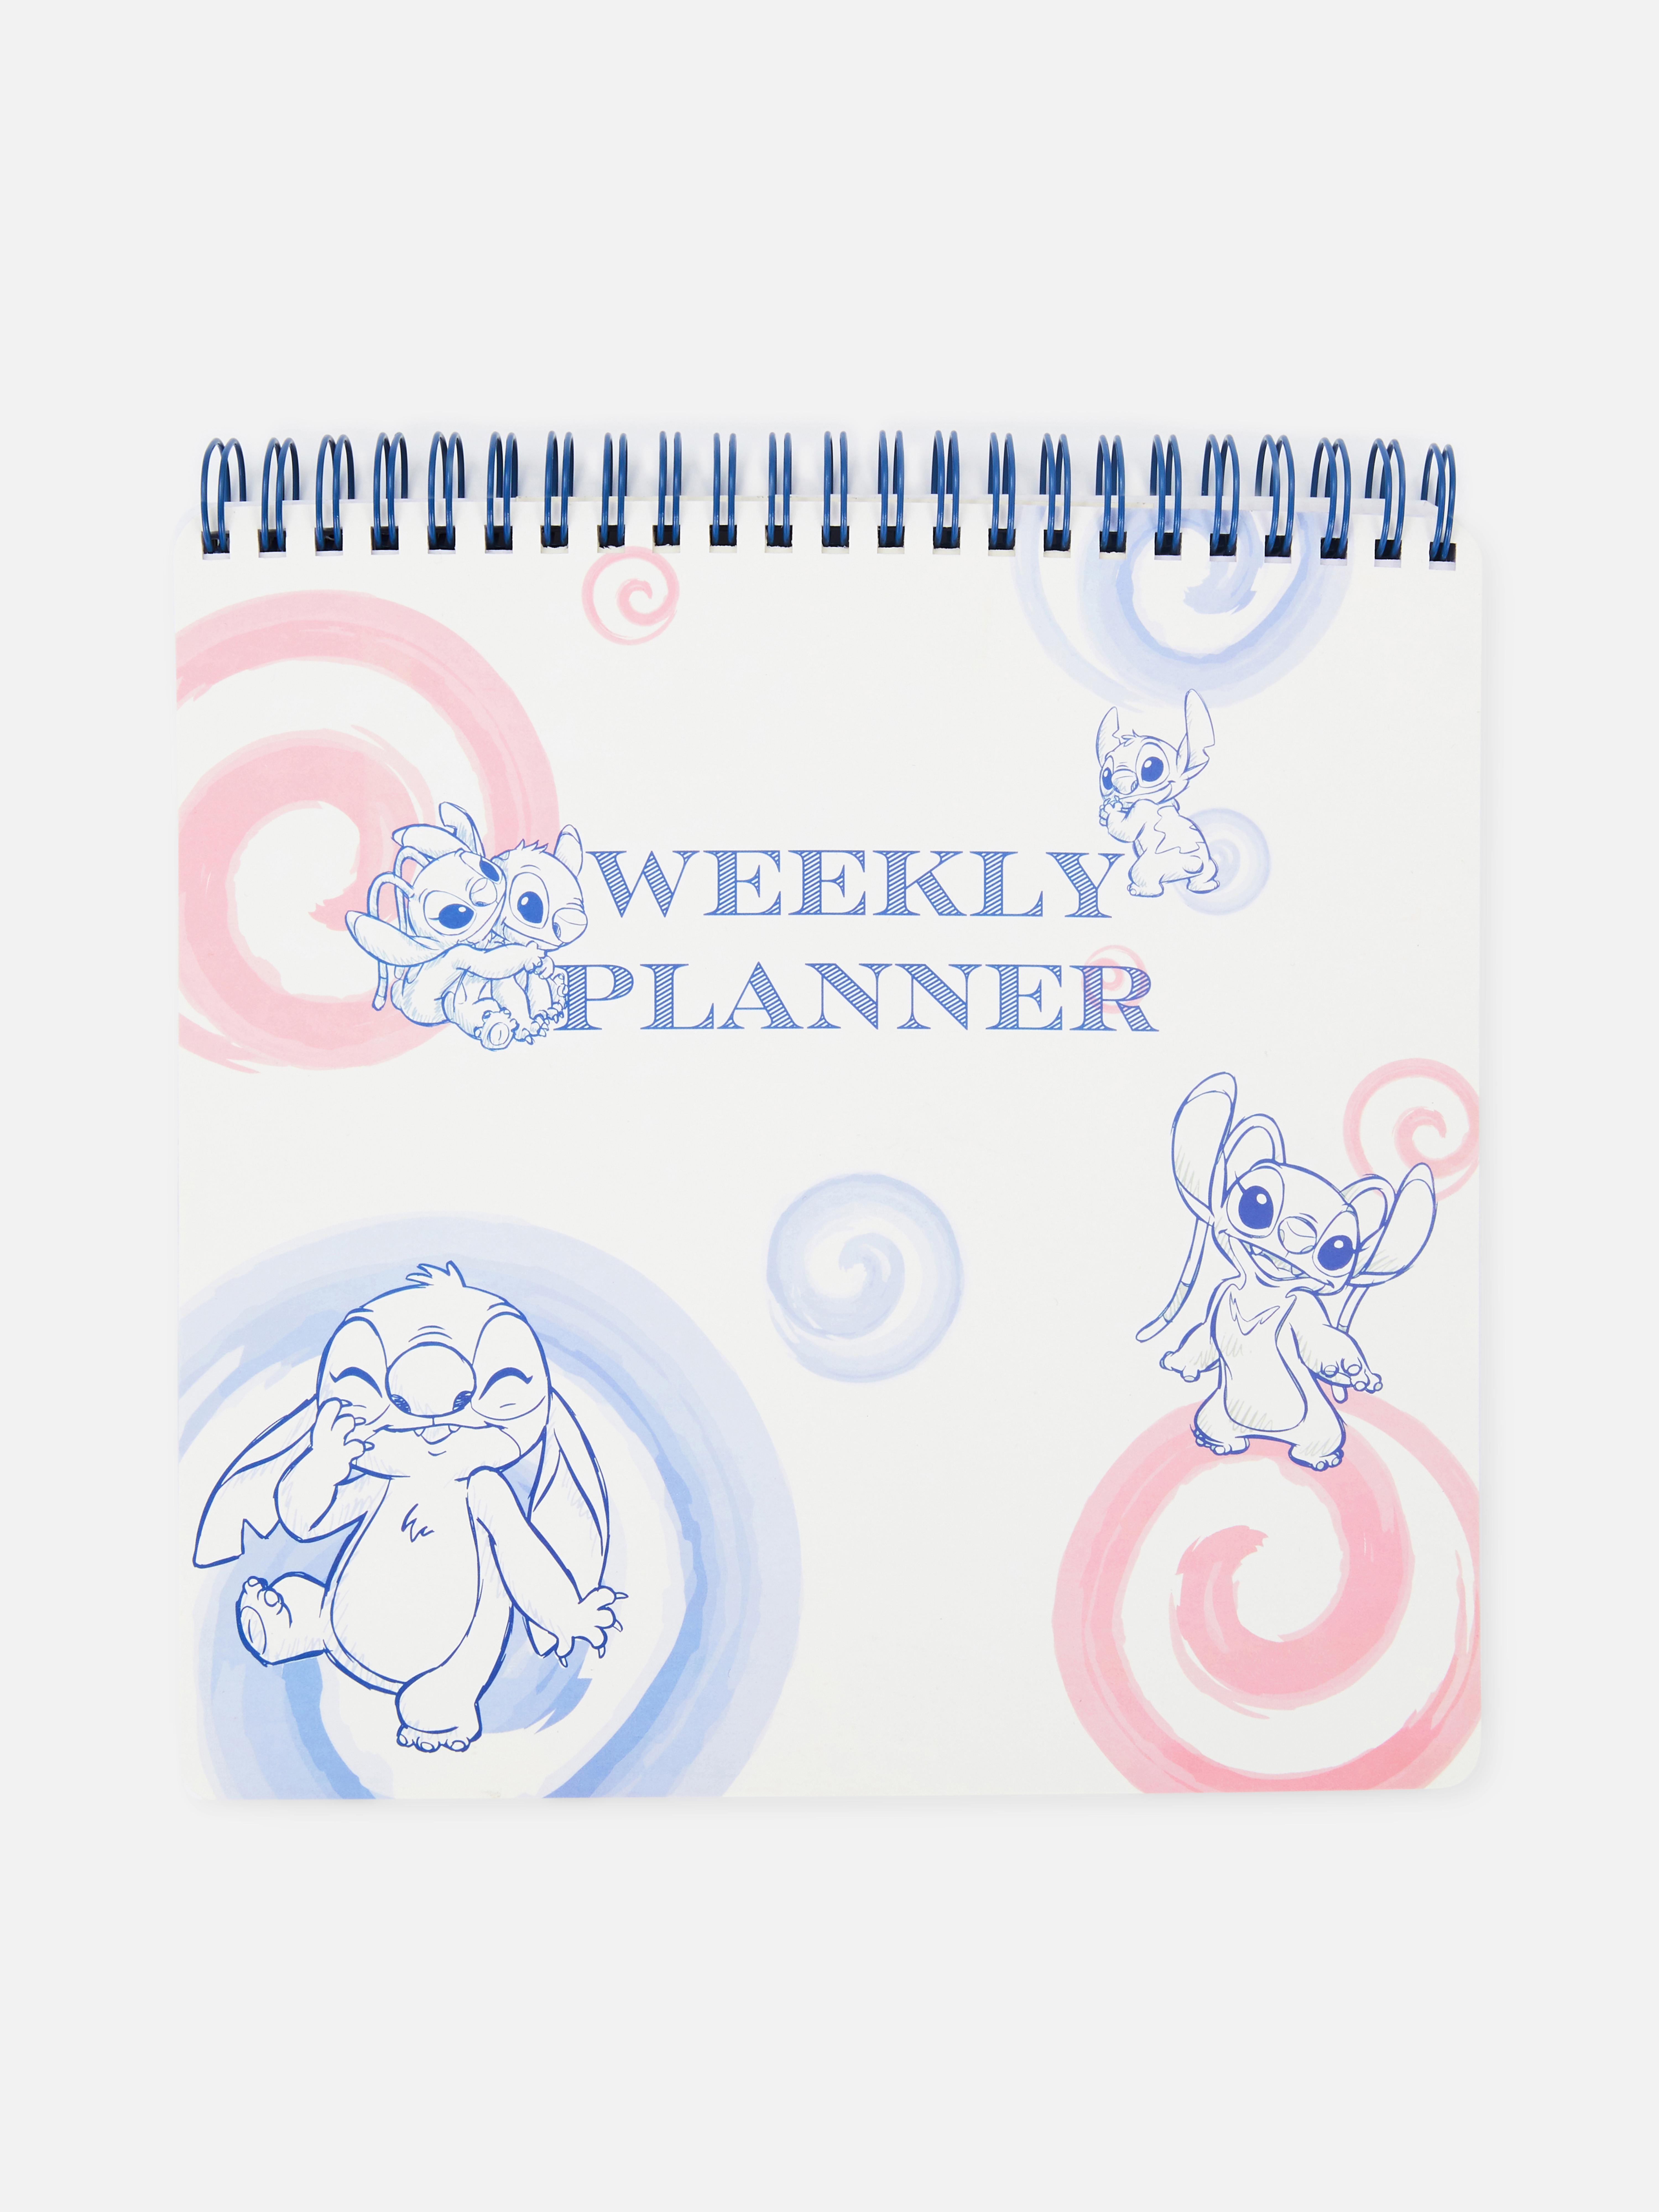 Disney’s Lilo & Stitch Weekly Planner